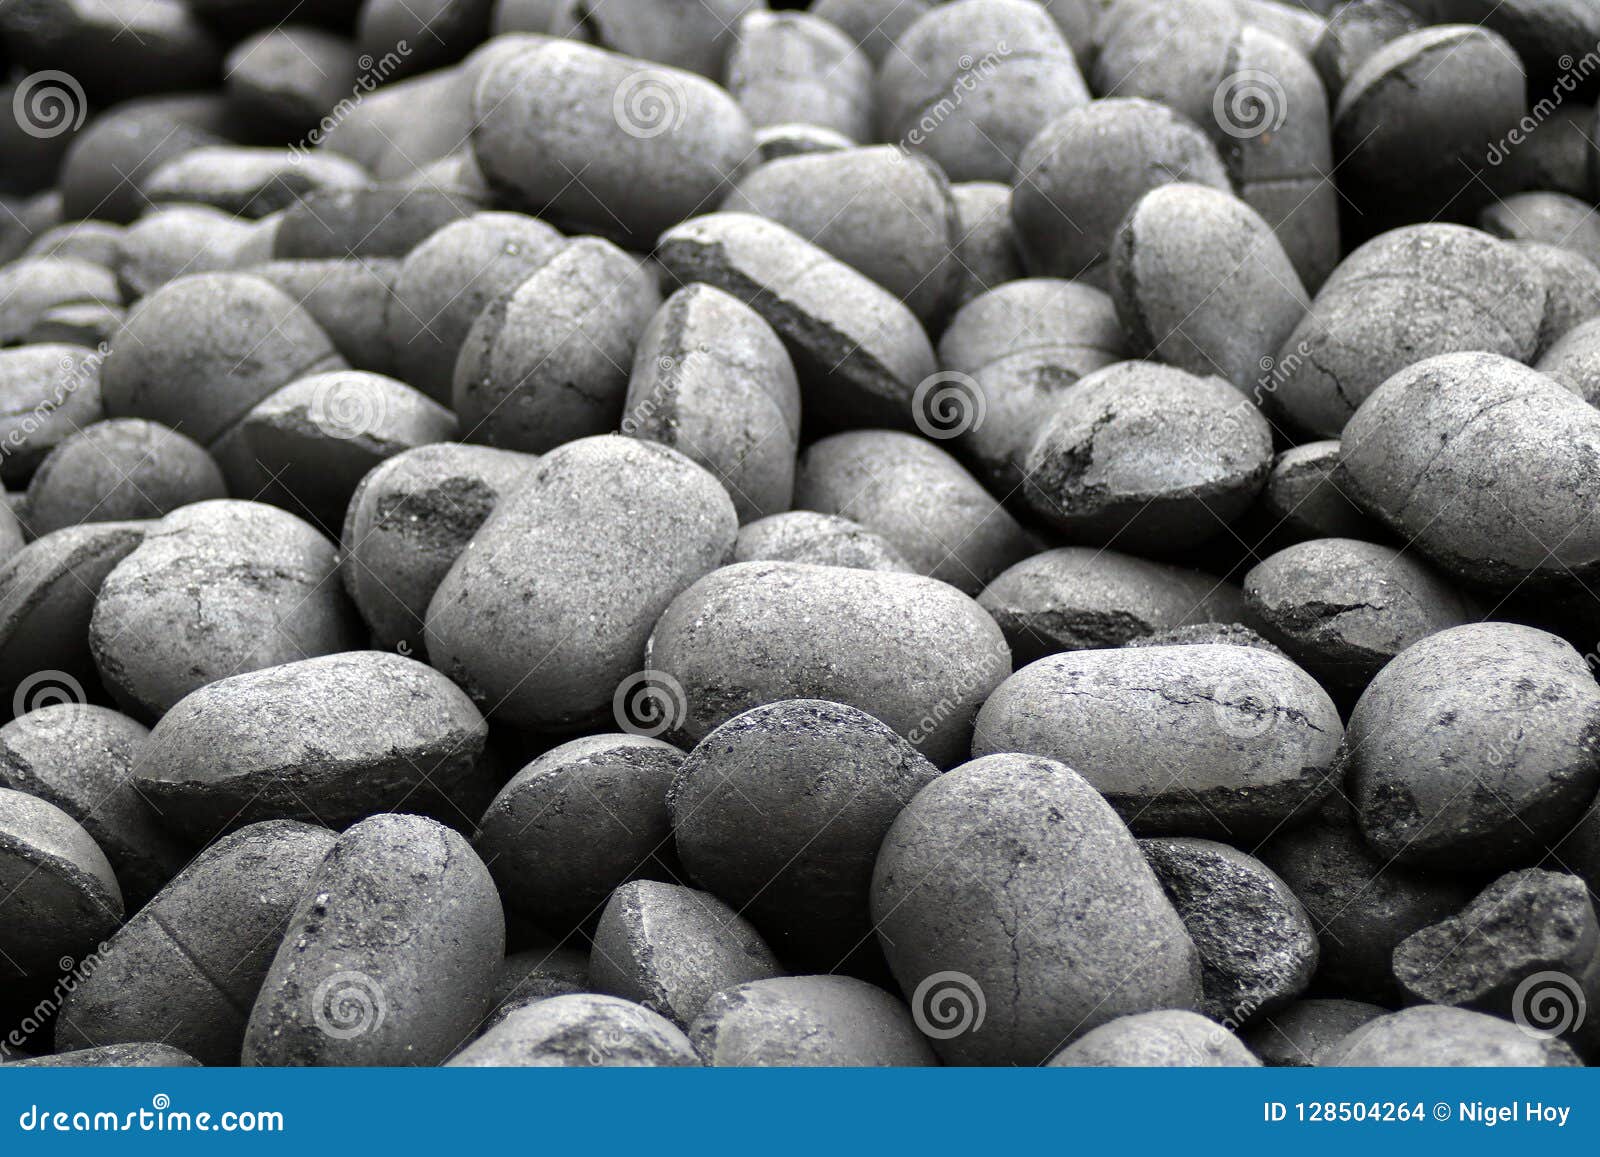 pile of anthracite smokeless coal fuel